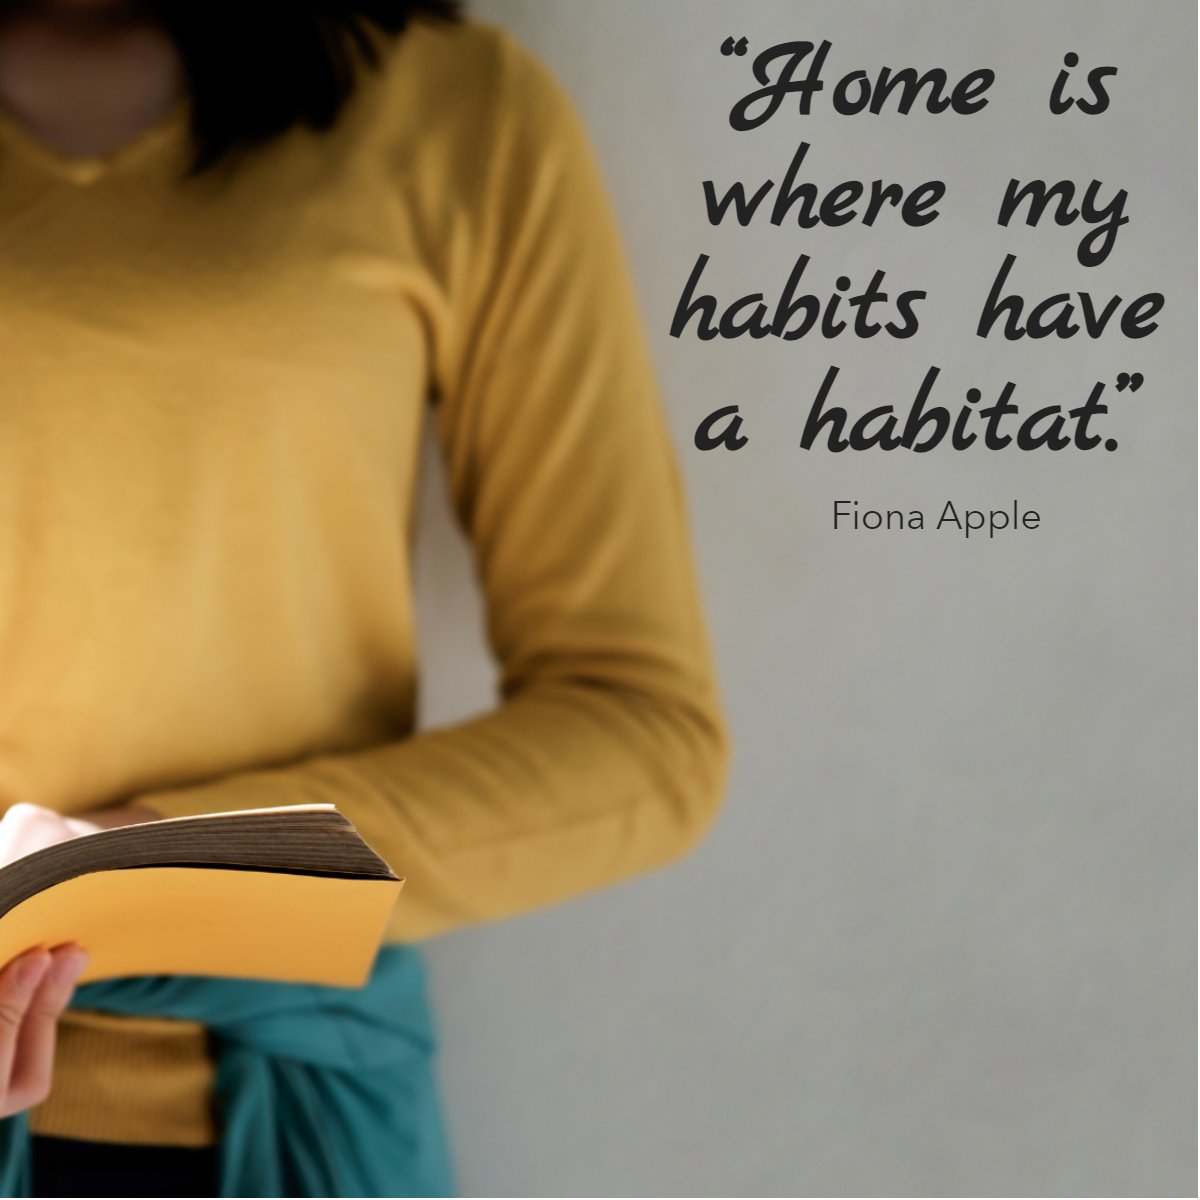 'Home is where my habits have a habitat.' 
― Fiona Apple 📖

#habits #realestate #realtor #buy #sell #homeowner #fun #inspiring #quoteoftheday #fionaapple
 #cincyrealtors #scavonerealtor #cincinnatirealestate #togetherwemakedealshappen #lebanonohio